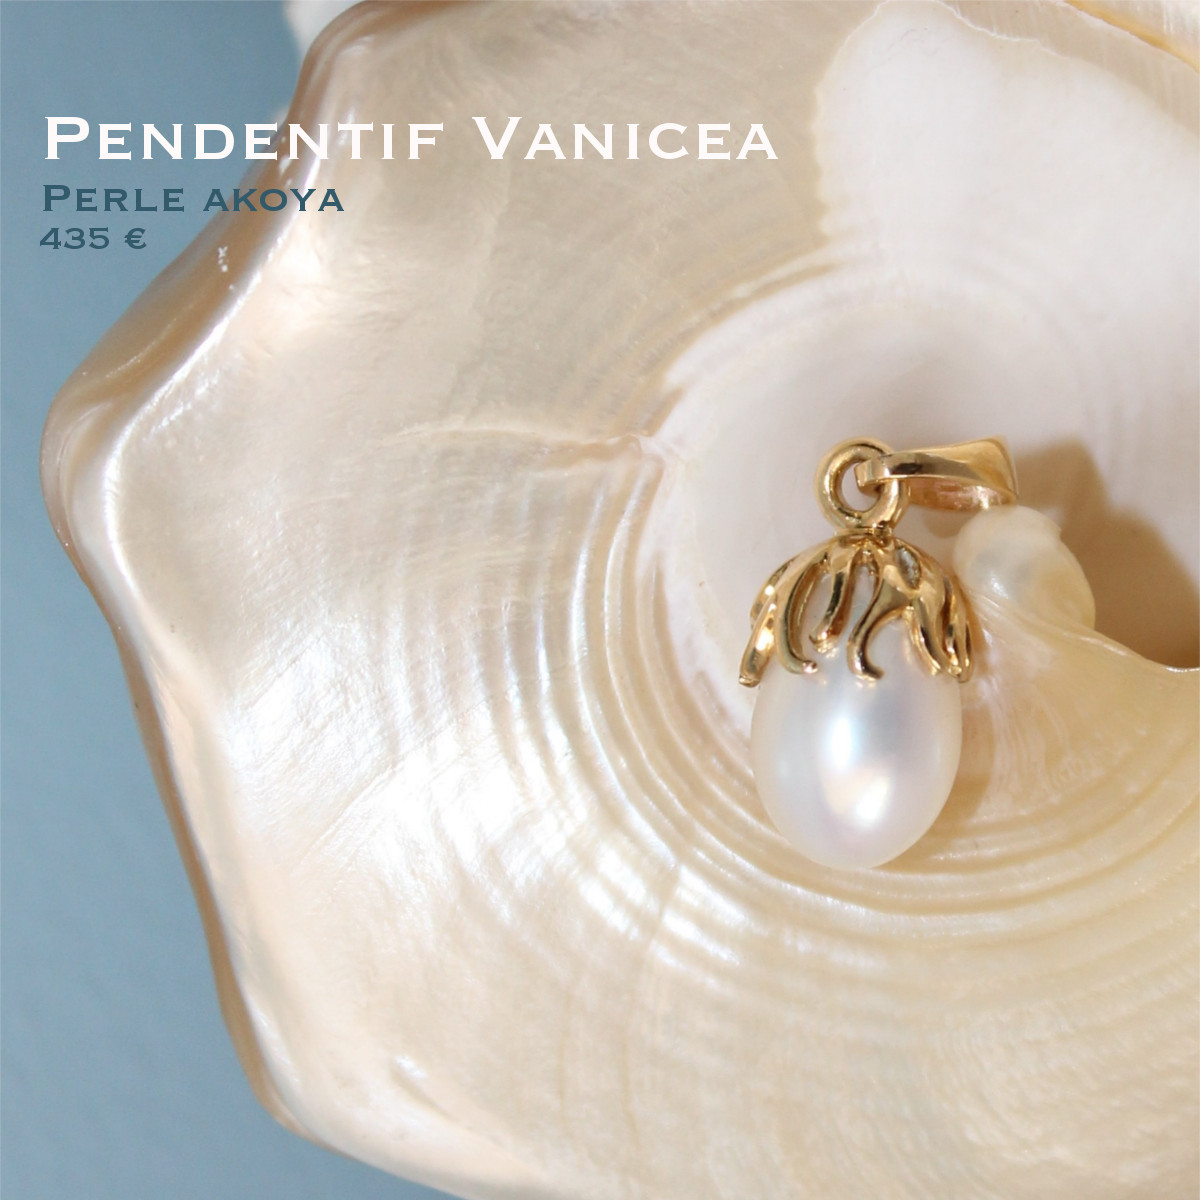 Pendentif Vanicea - Image 3 